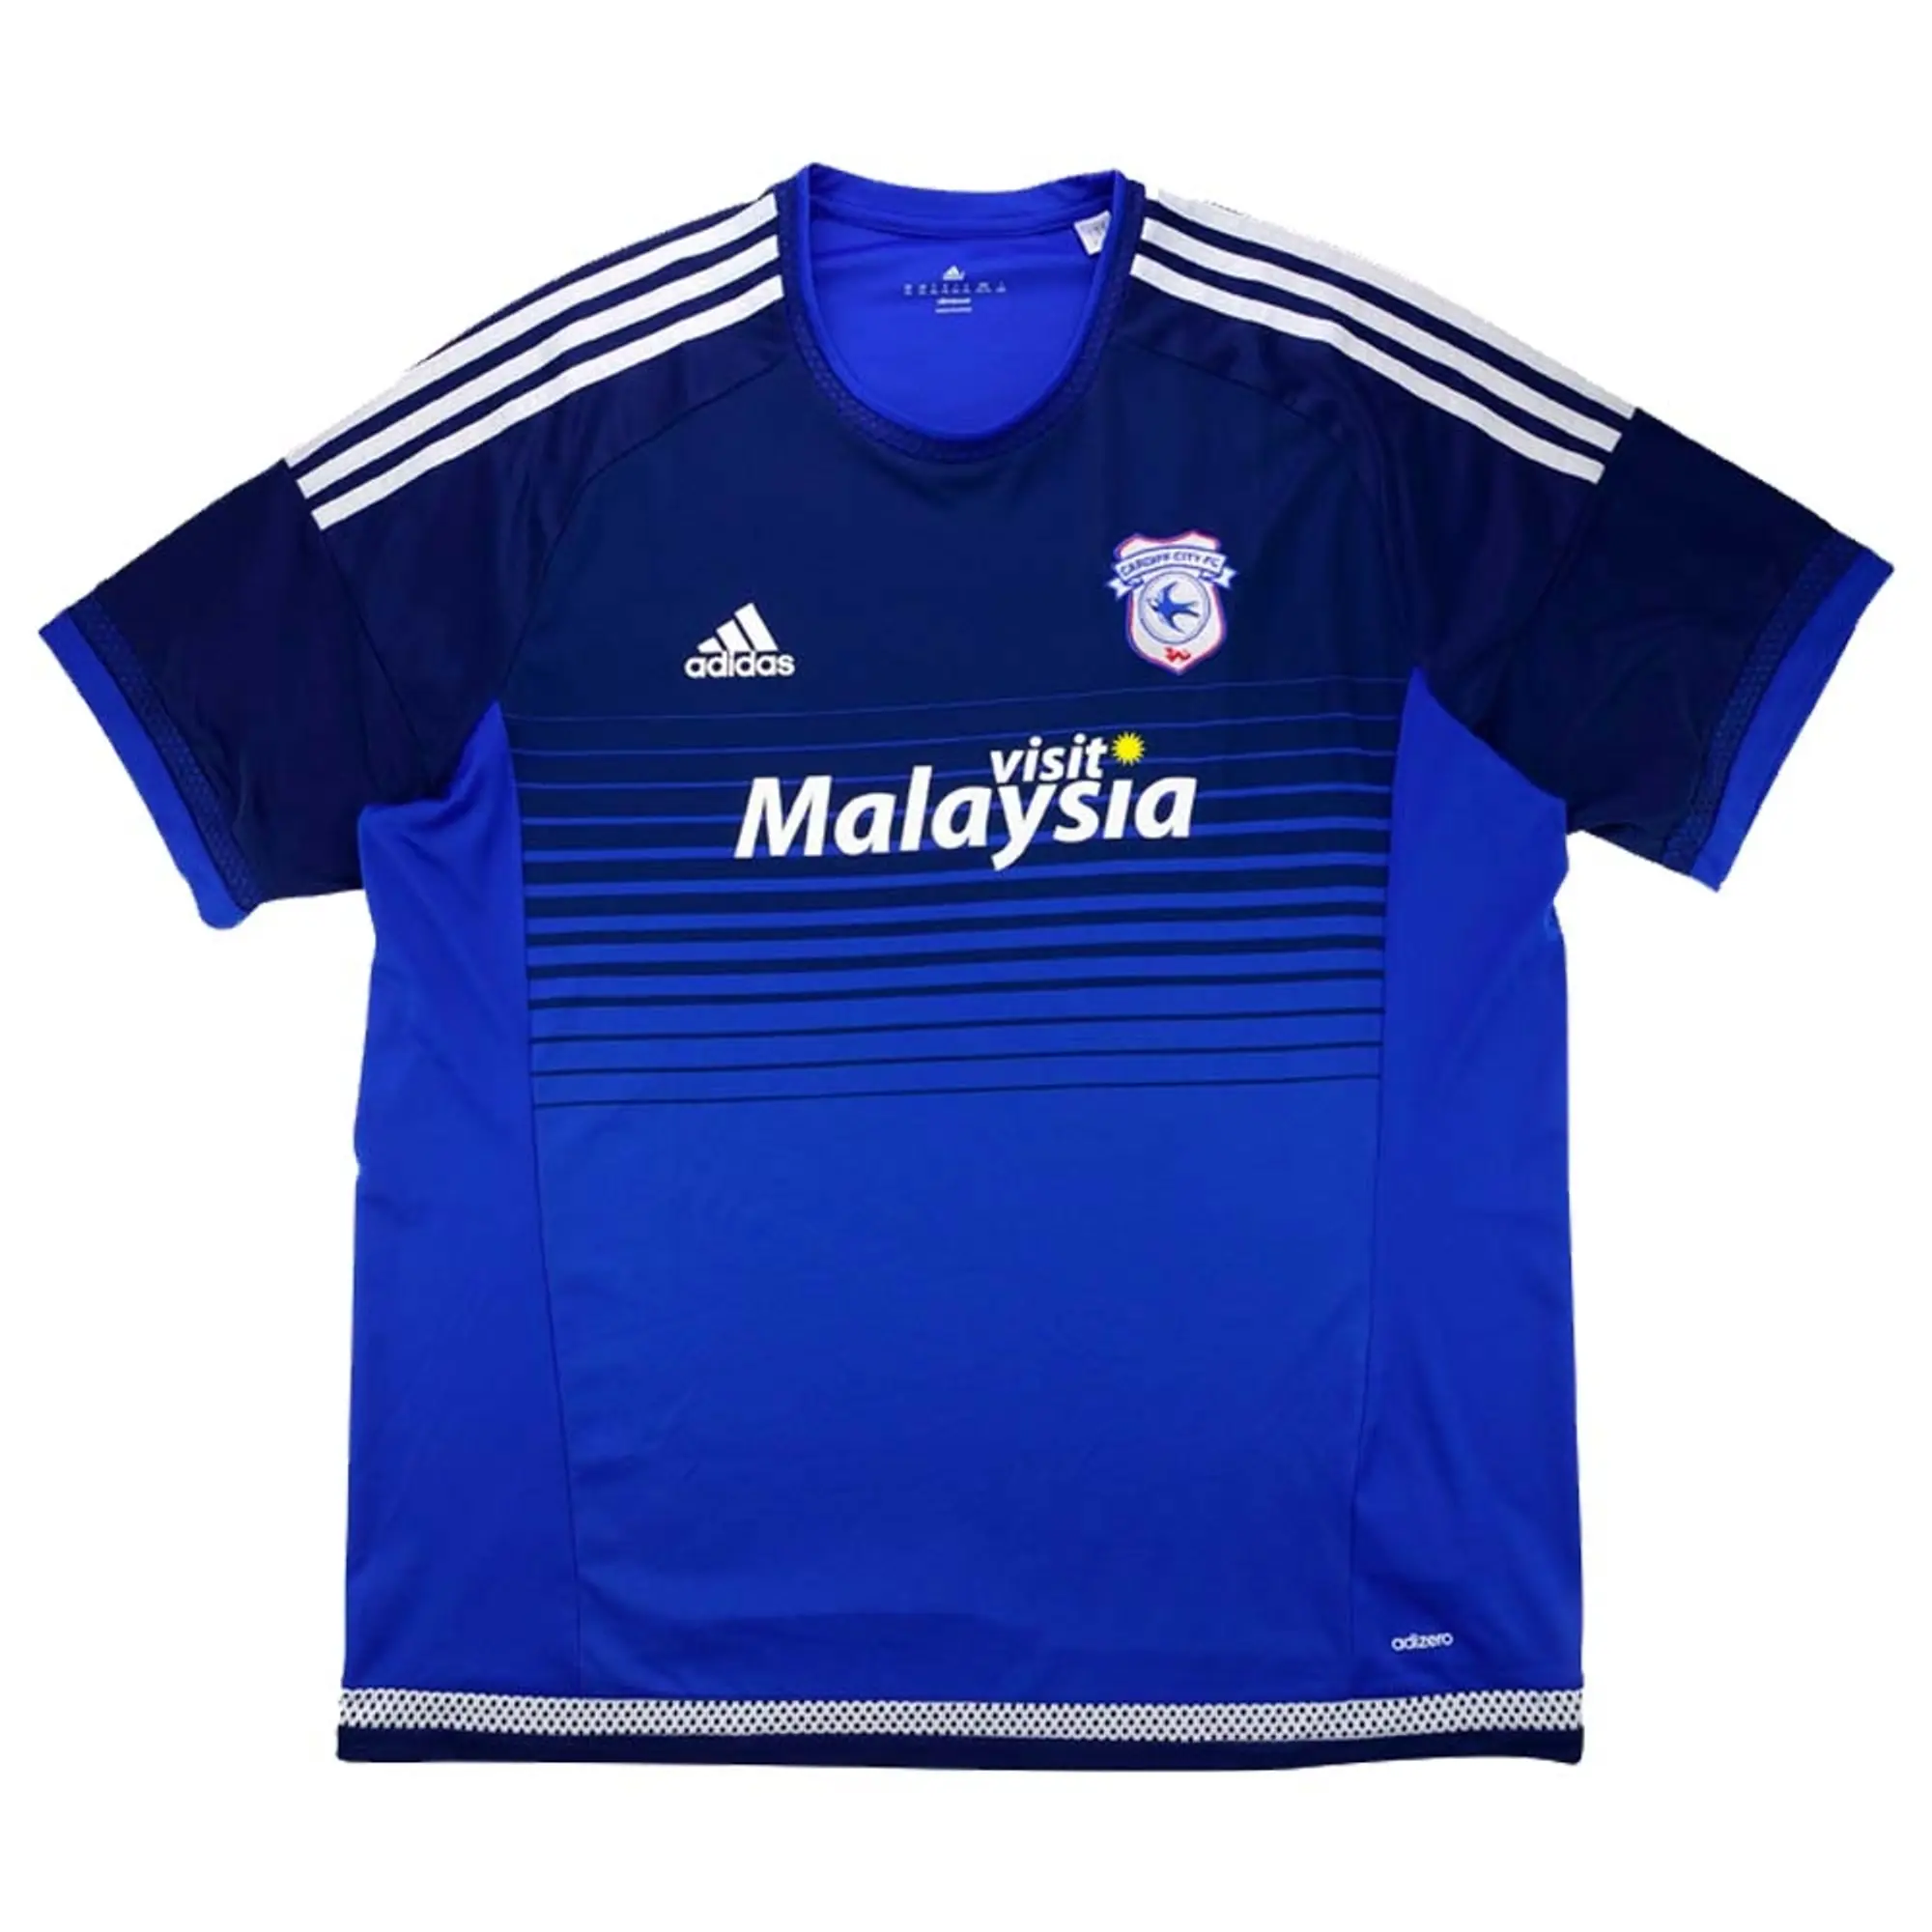 2019/20 Cardiff City Away Football Shirt / Old Adidas Soccer Jersey